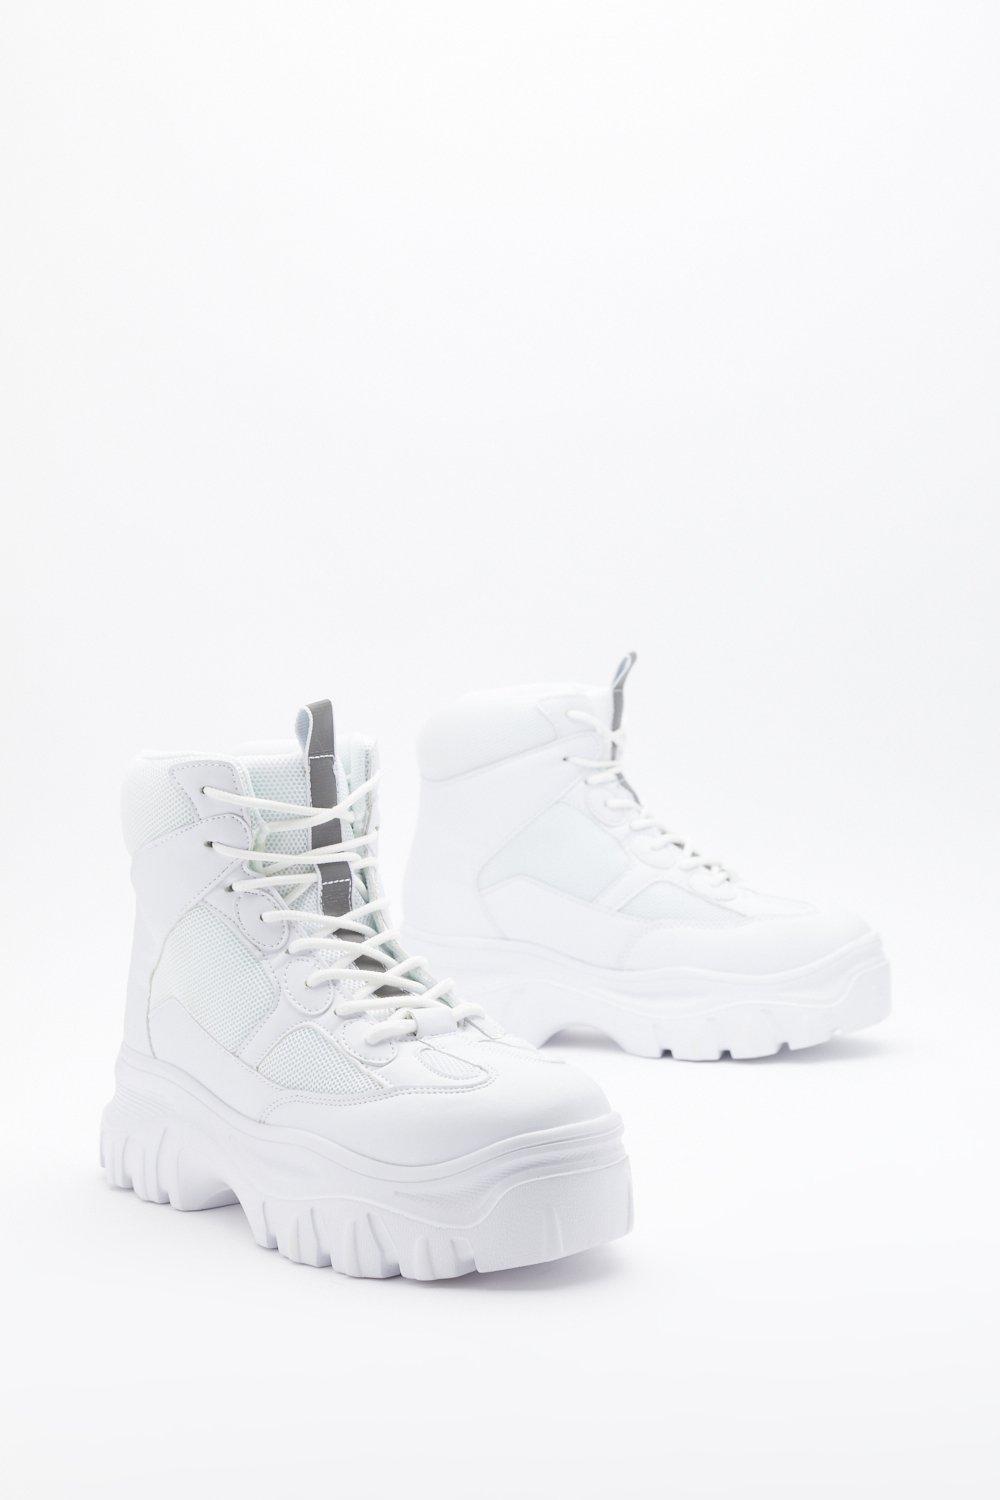 white flatform chunky hiker boot trainer